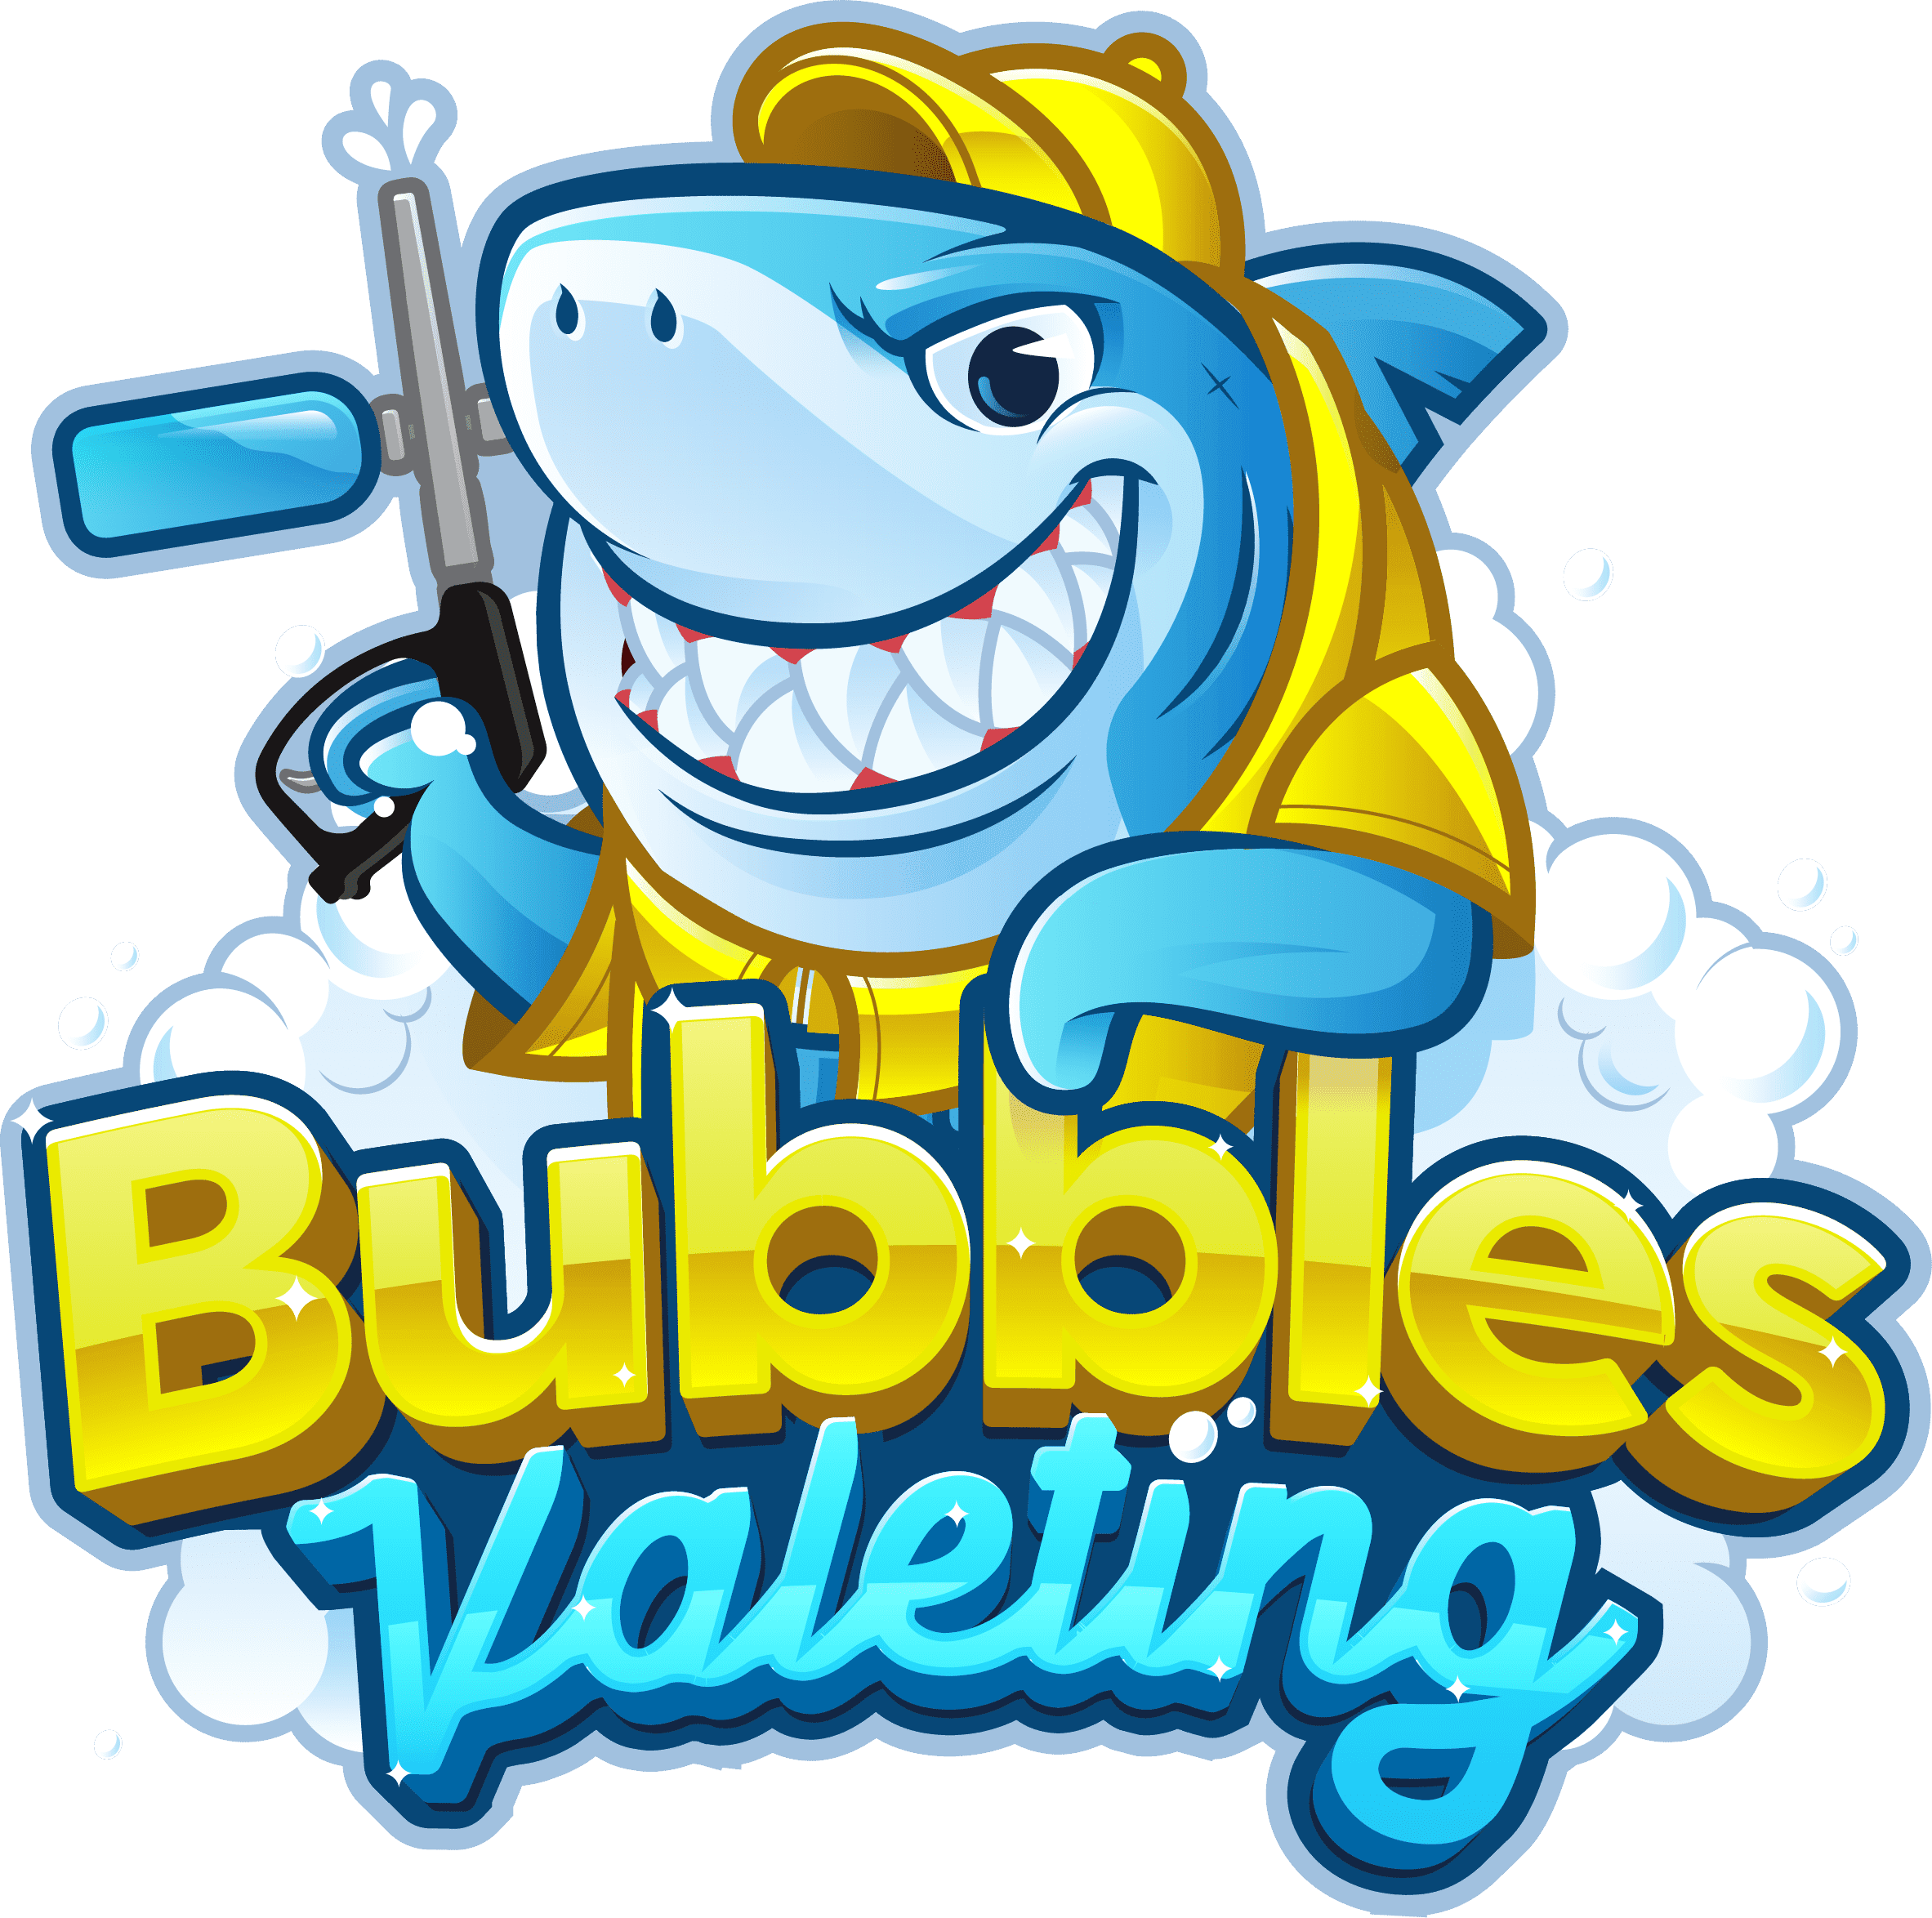 Bubbles Valeting